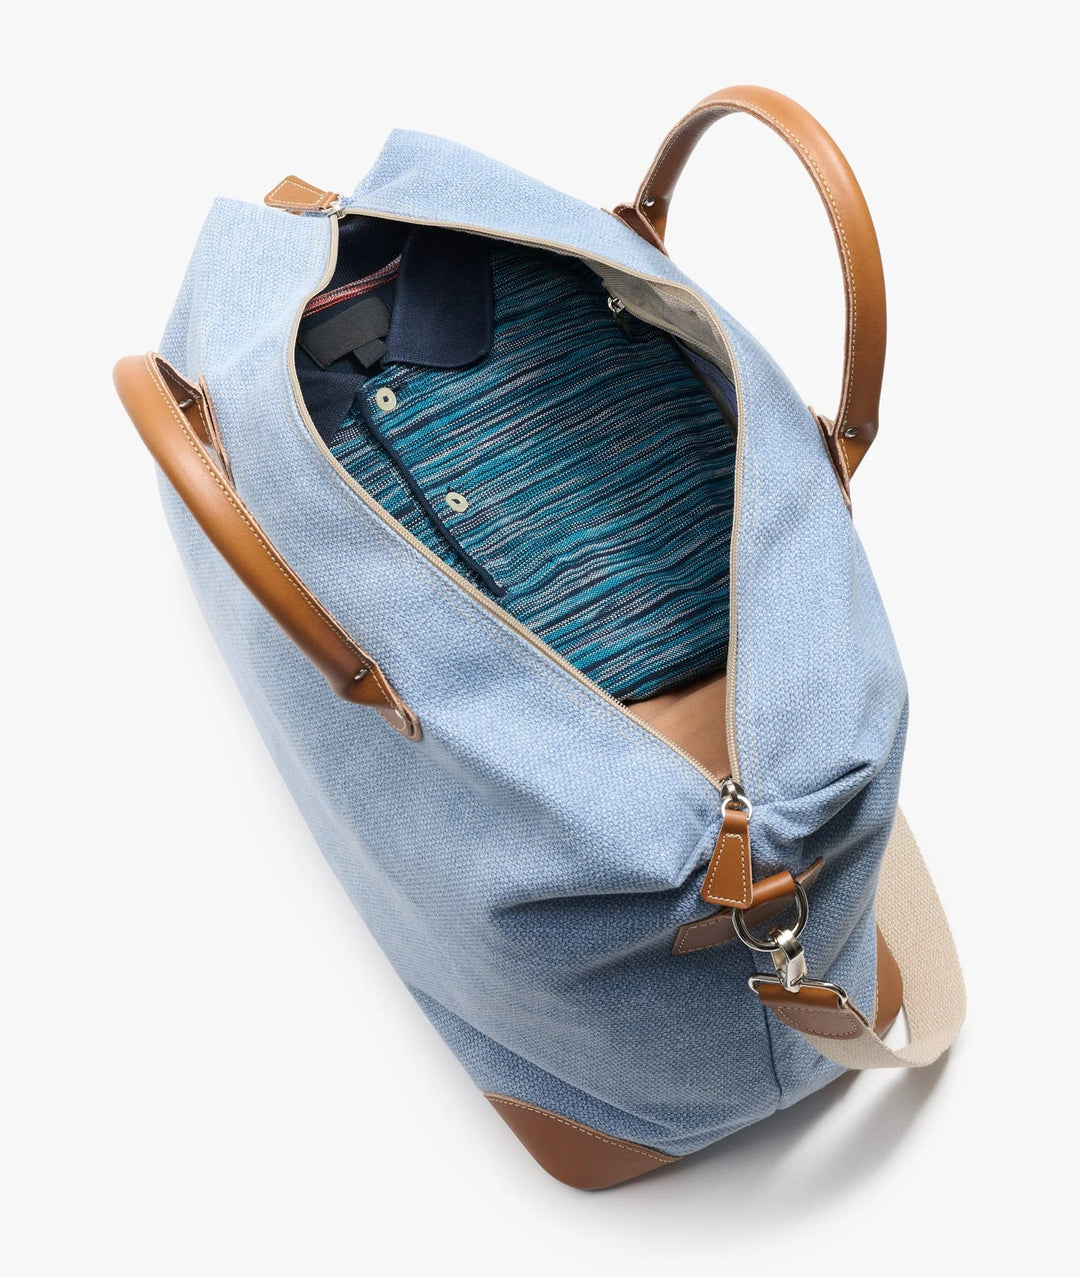 MyStyleBags Travel Bags My Style Bags Harvard Ischia Small Duffel Travel Bag Light Blue Brand